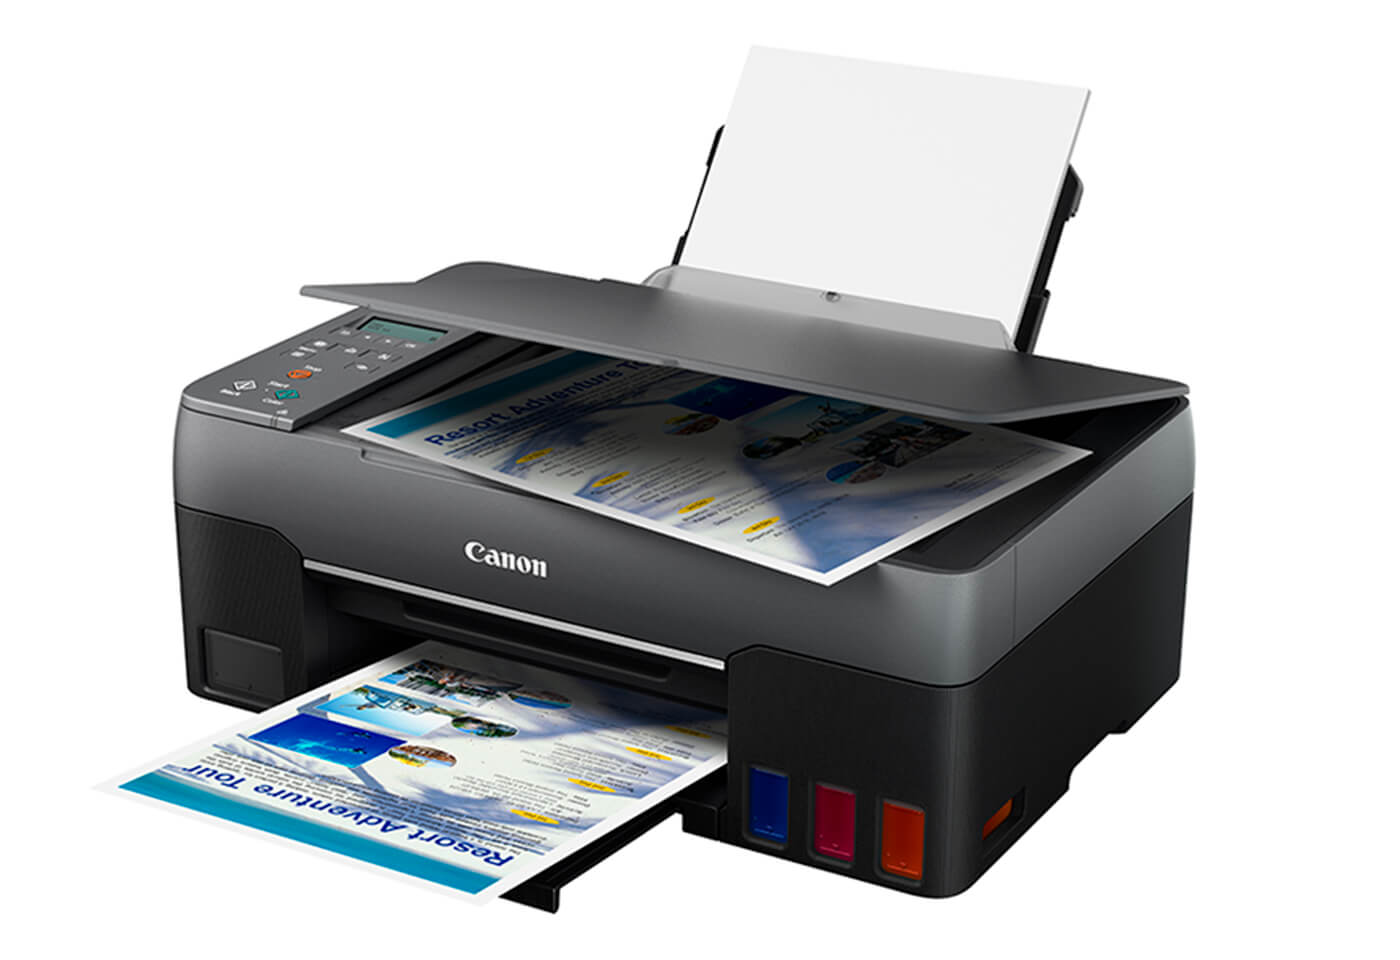 Side profile image of PIXMA G3620 MegaTank printer with tray open